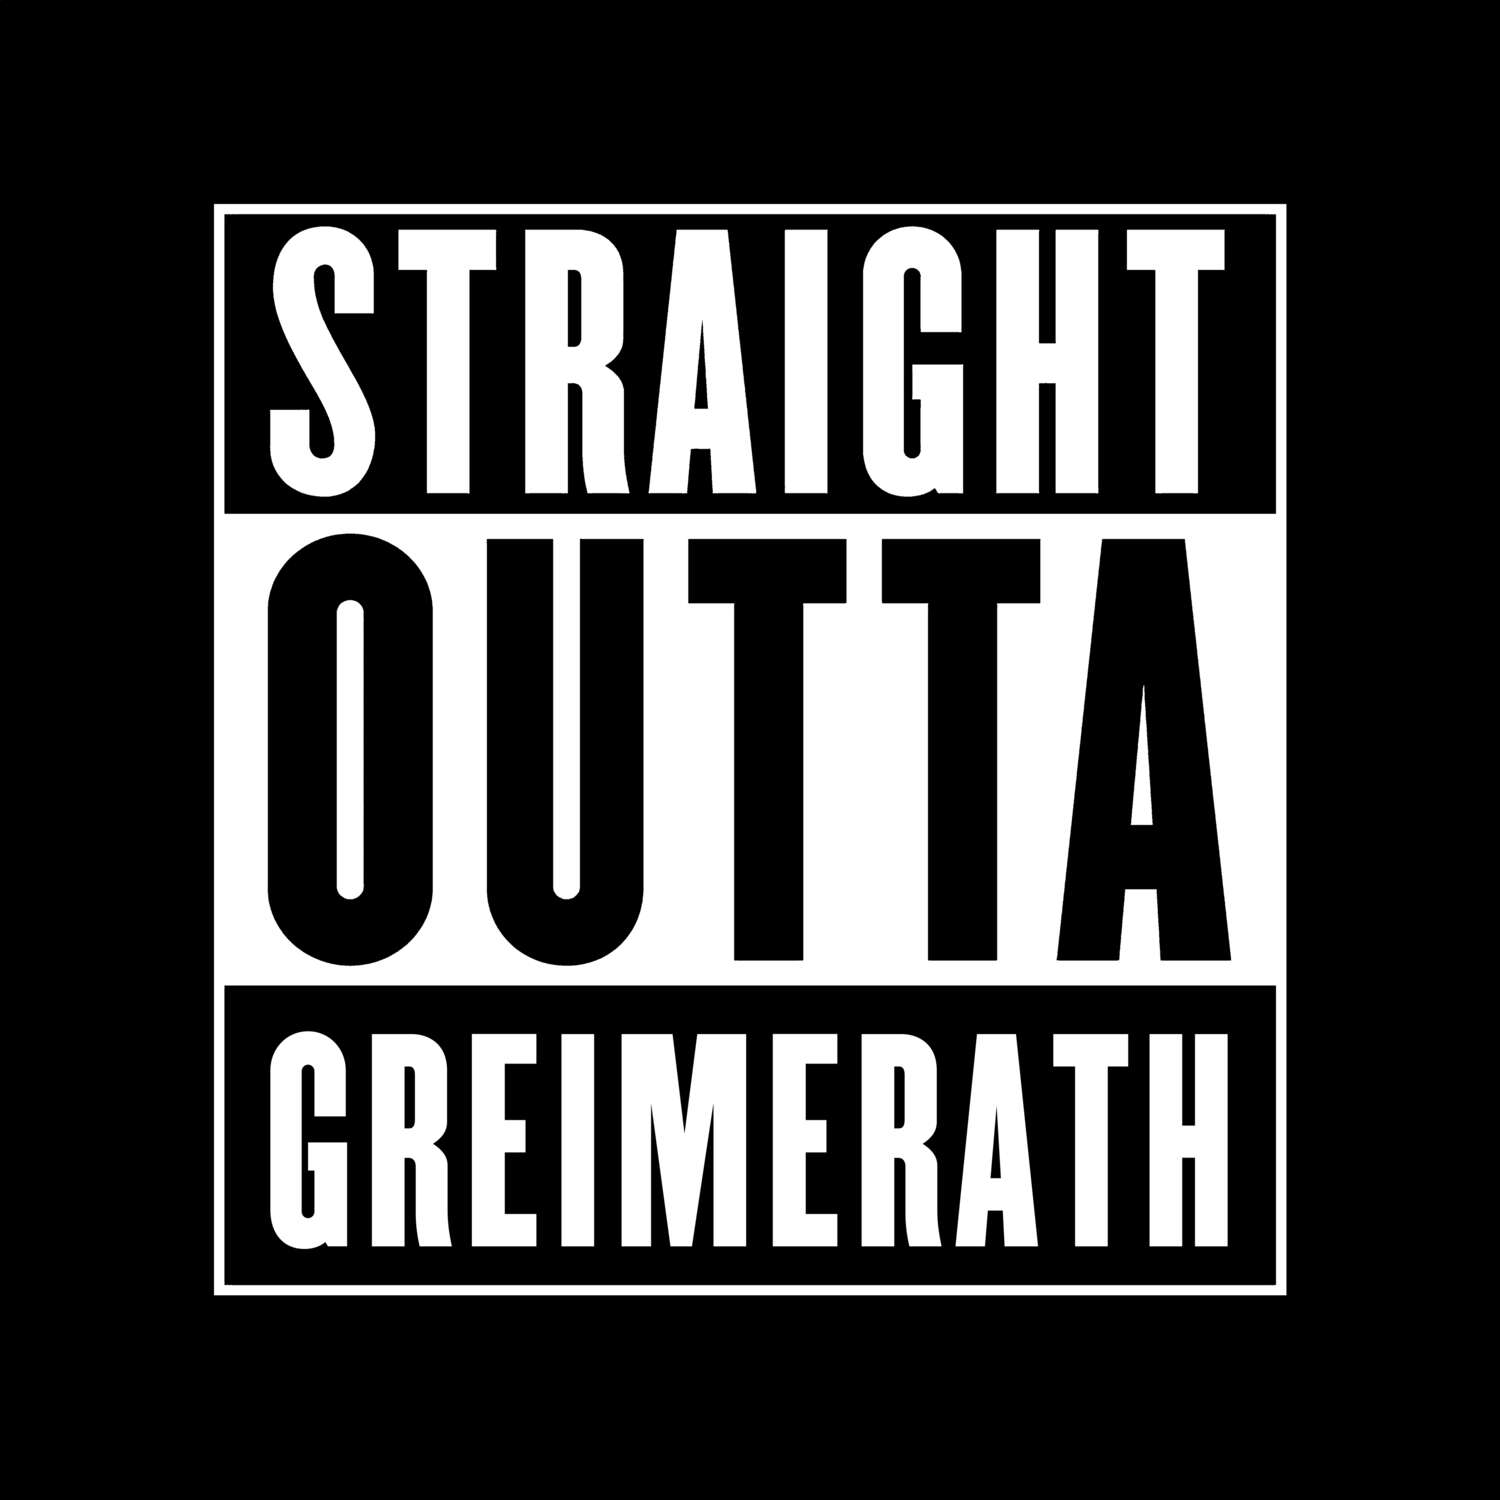 Greimerath T-Shirt »Straight Outta«